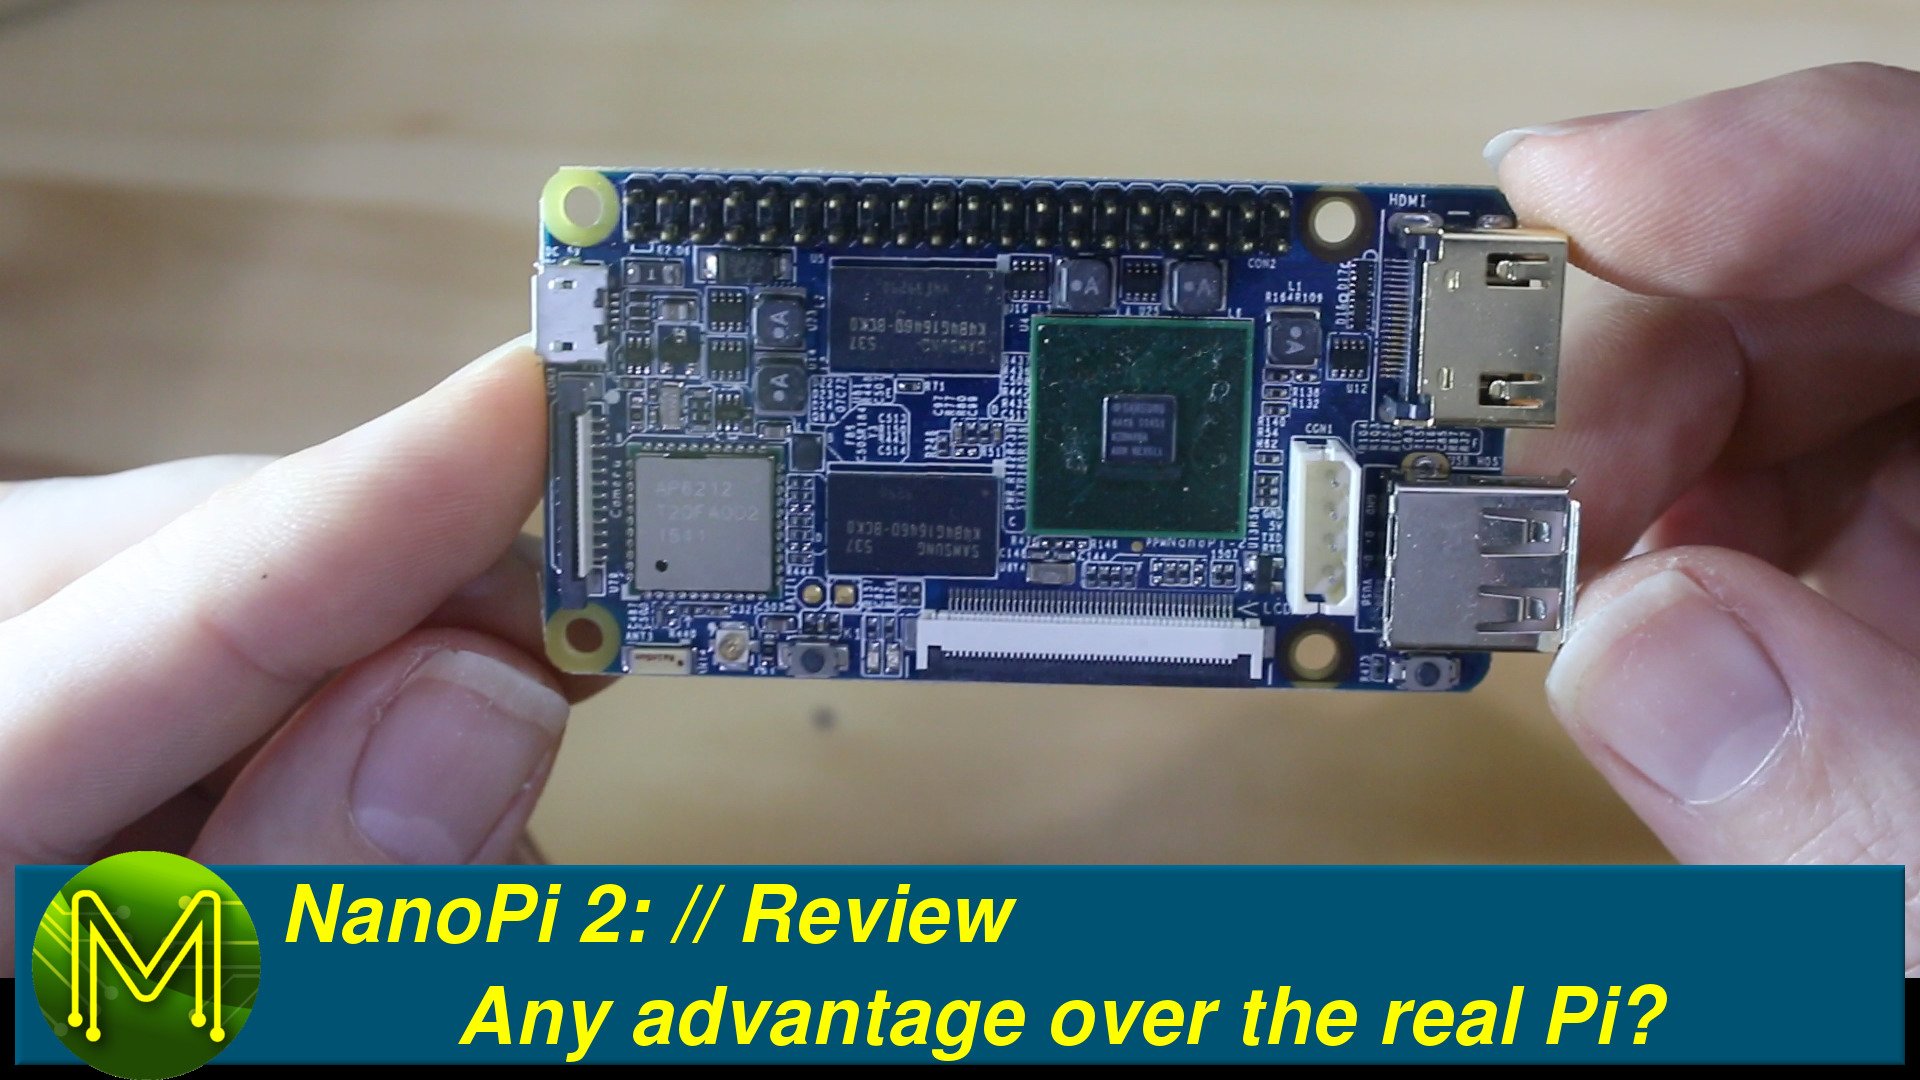 NanoPi2: Any advantage over the real Pi? // Review